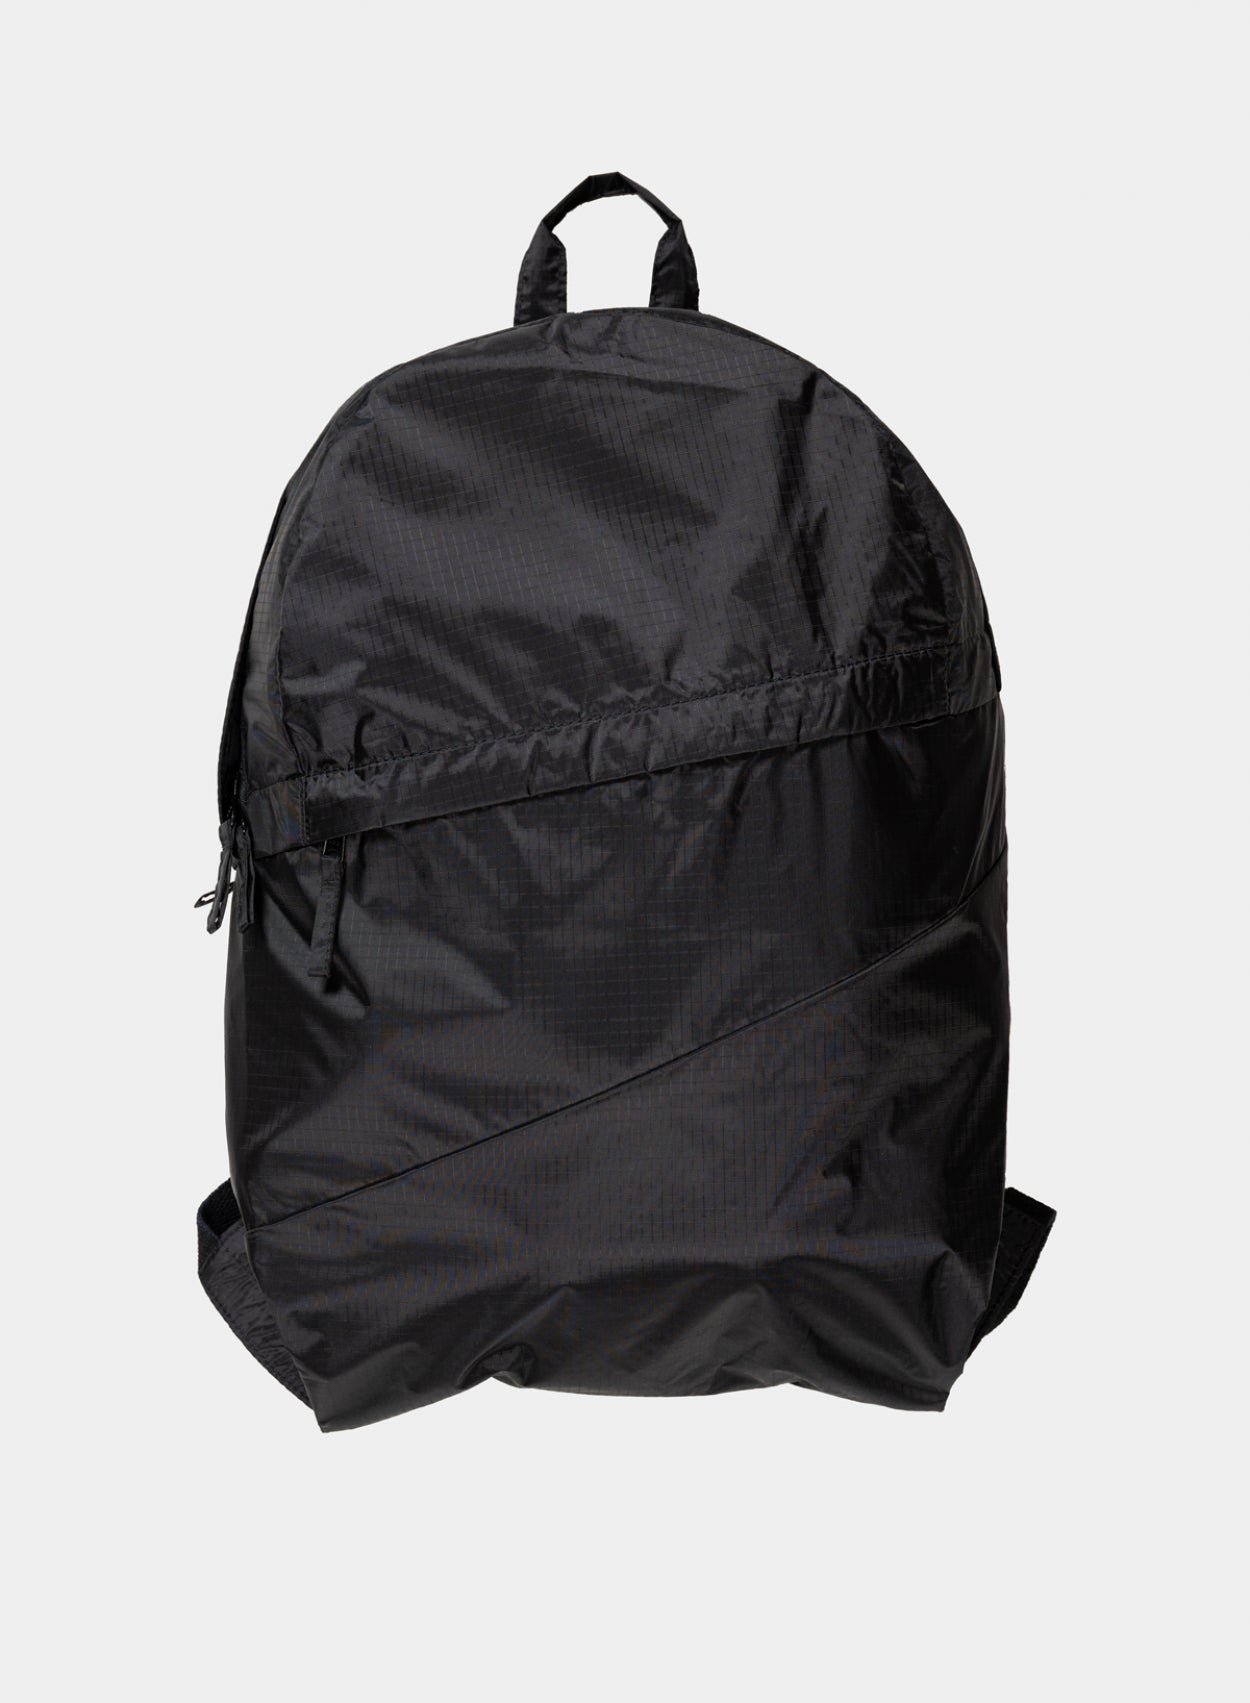 The New Foldable Backpack Black & Black Large